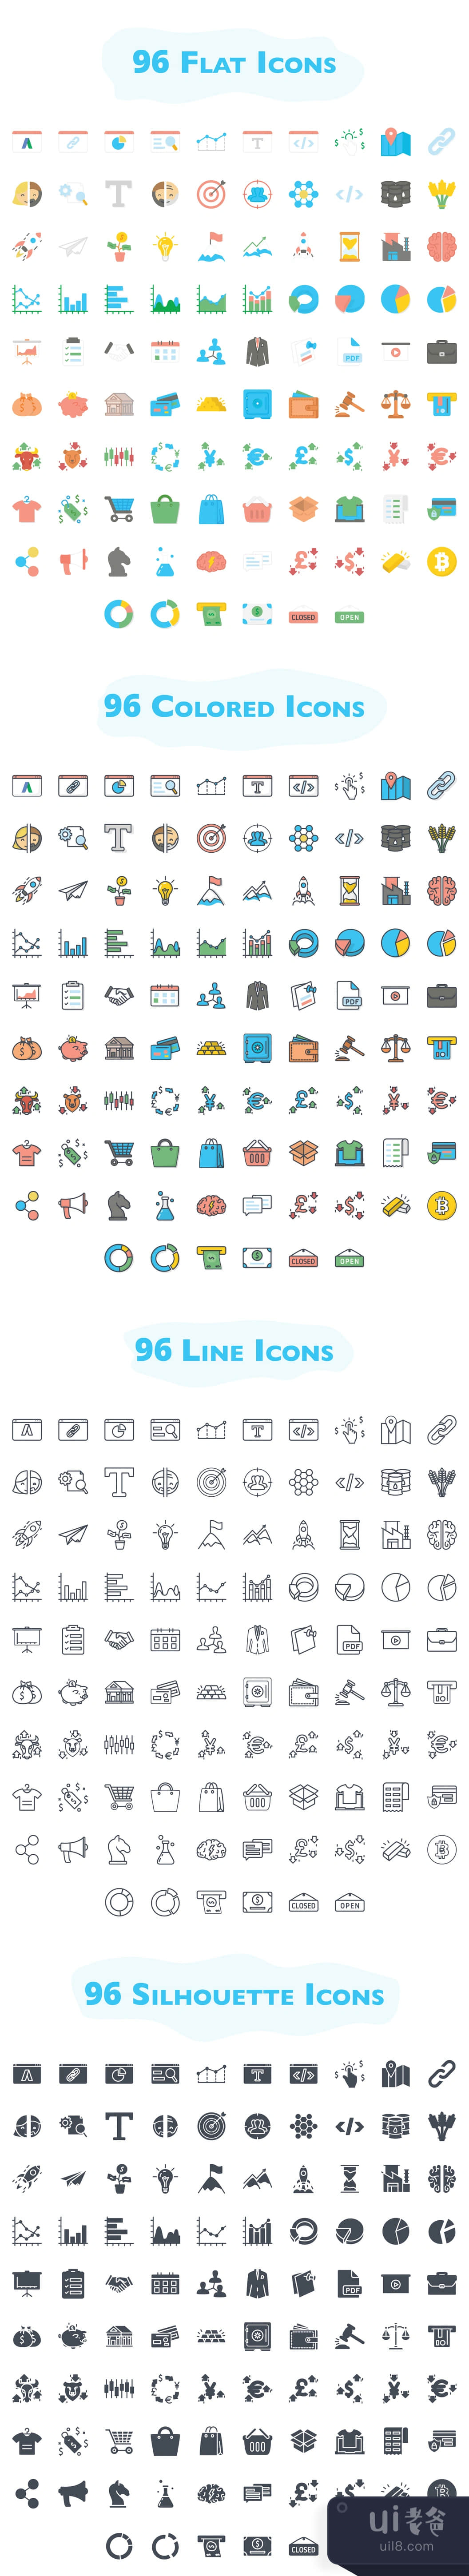 384个商业图标 (384 Business Icons)插图